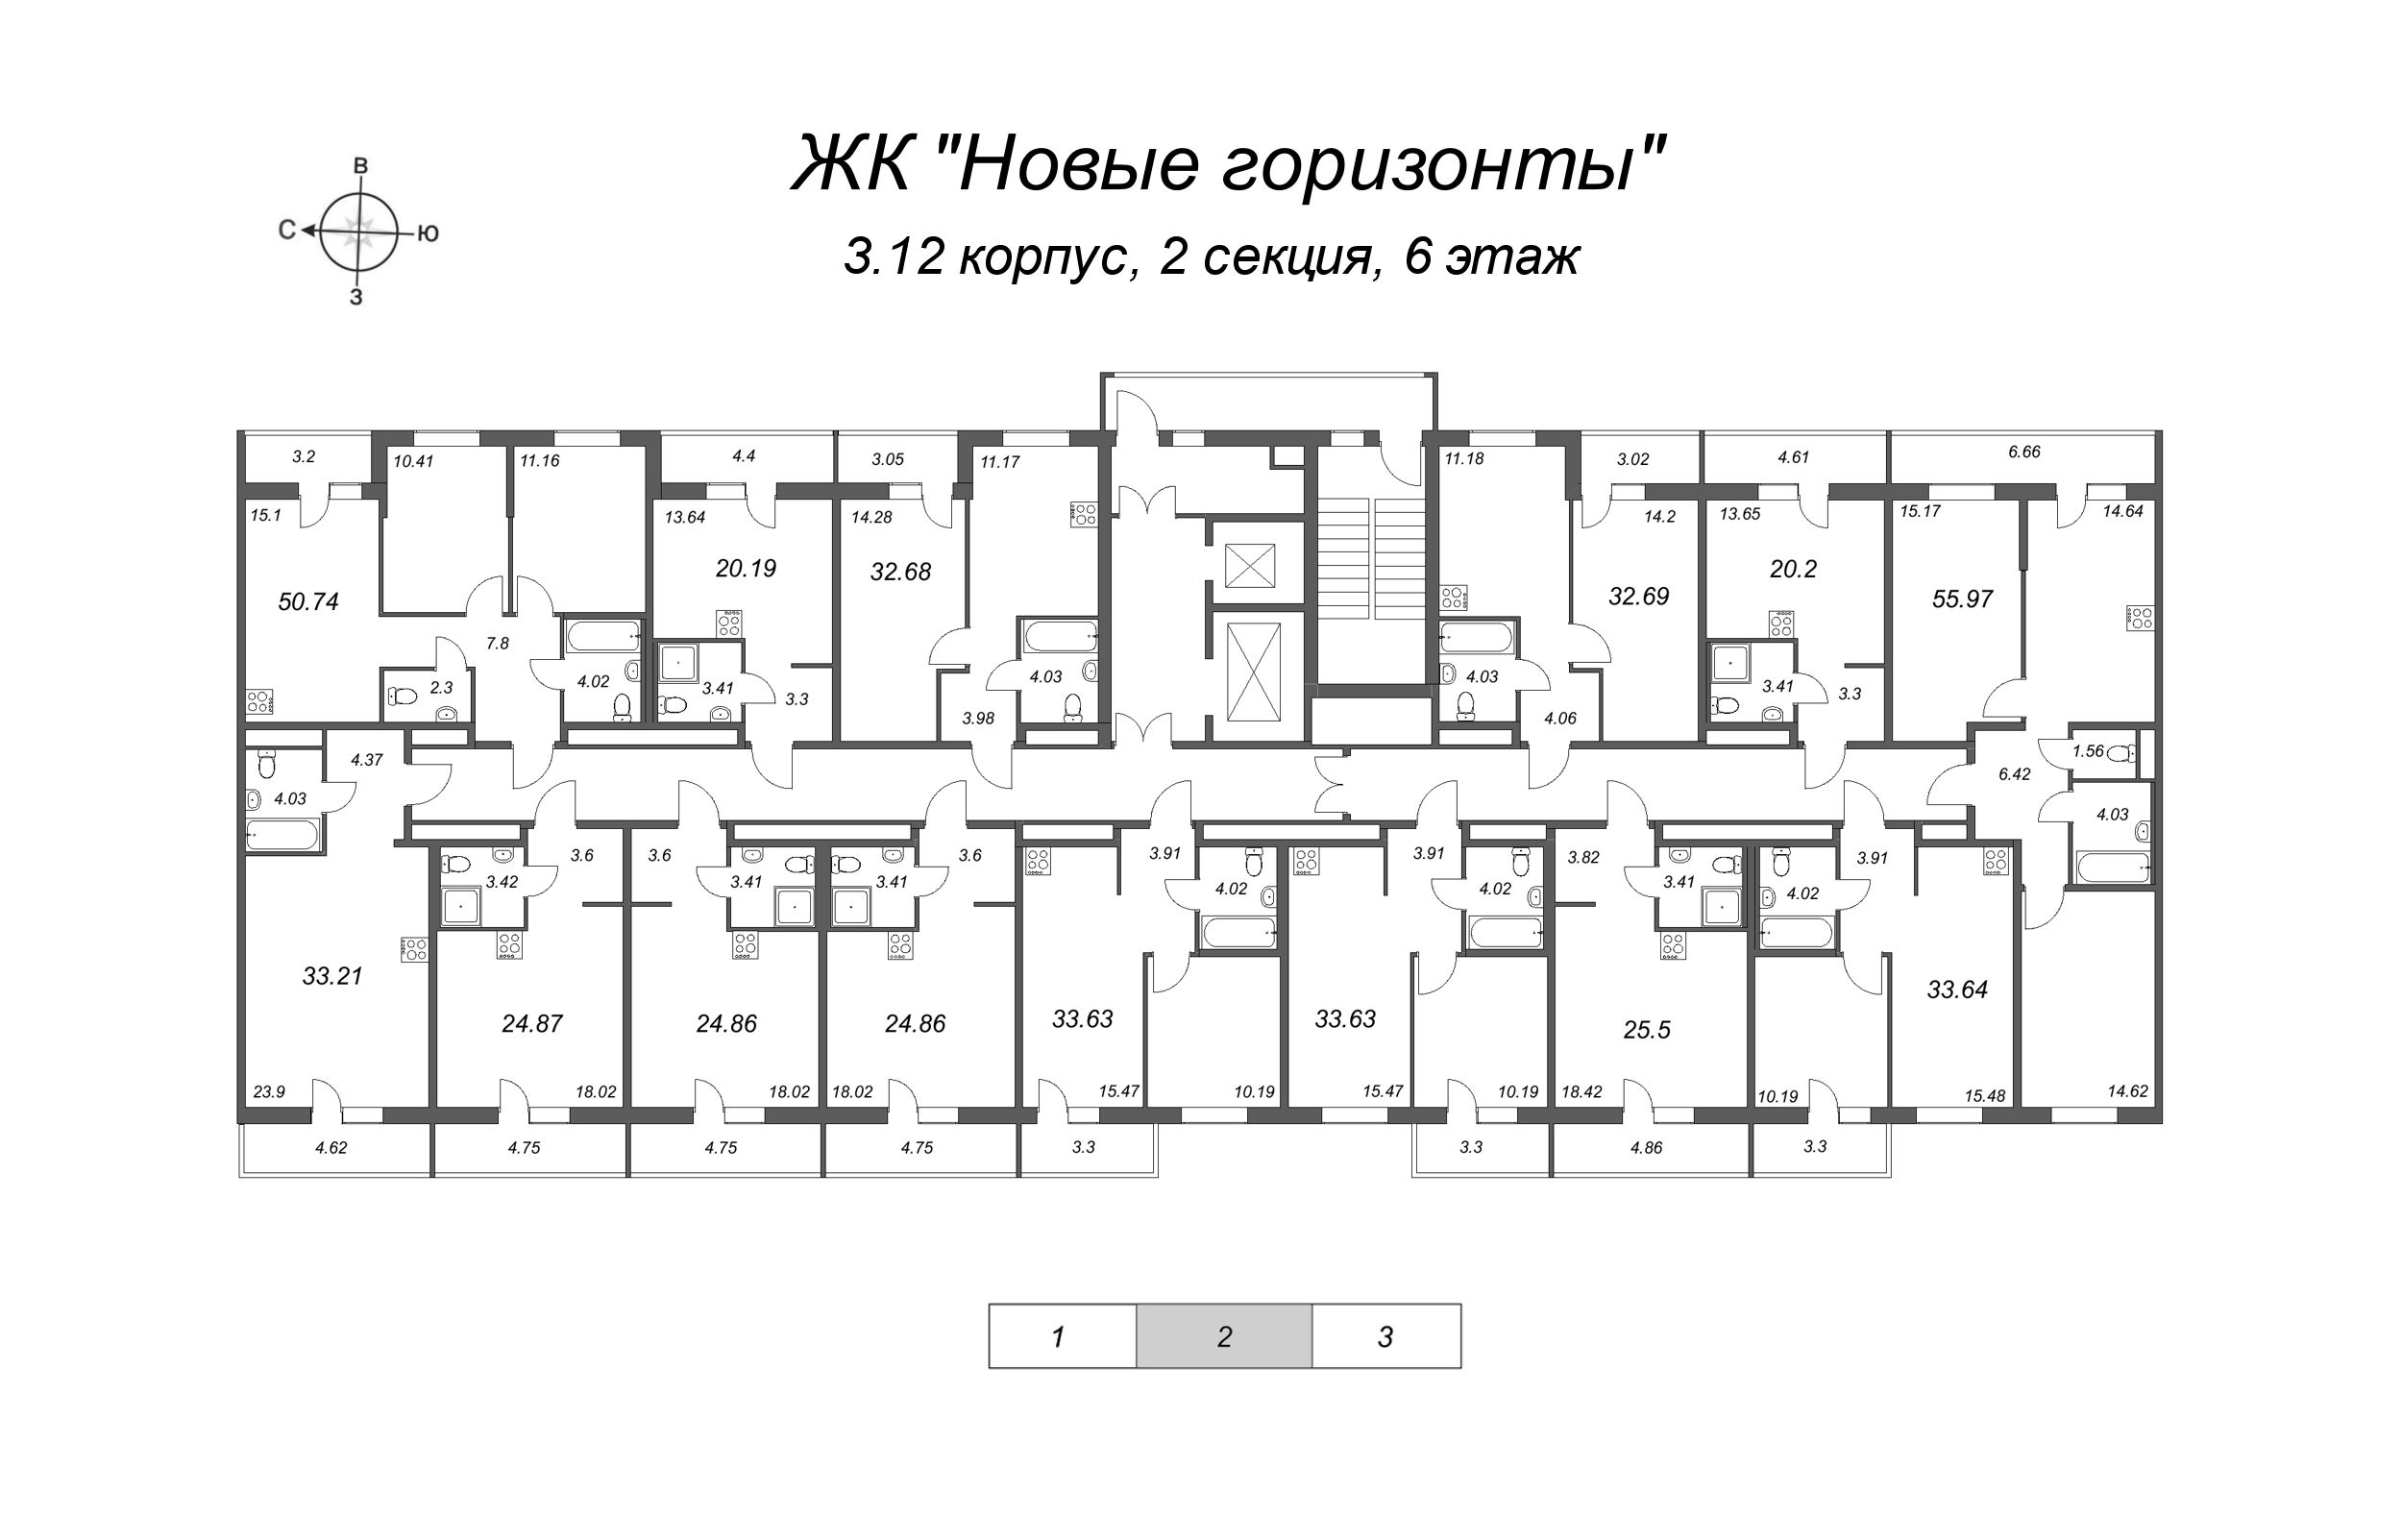 3-комнатная (Евро) квартира, 50.74 м² - планировка этажа